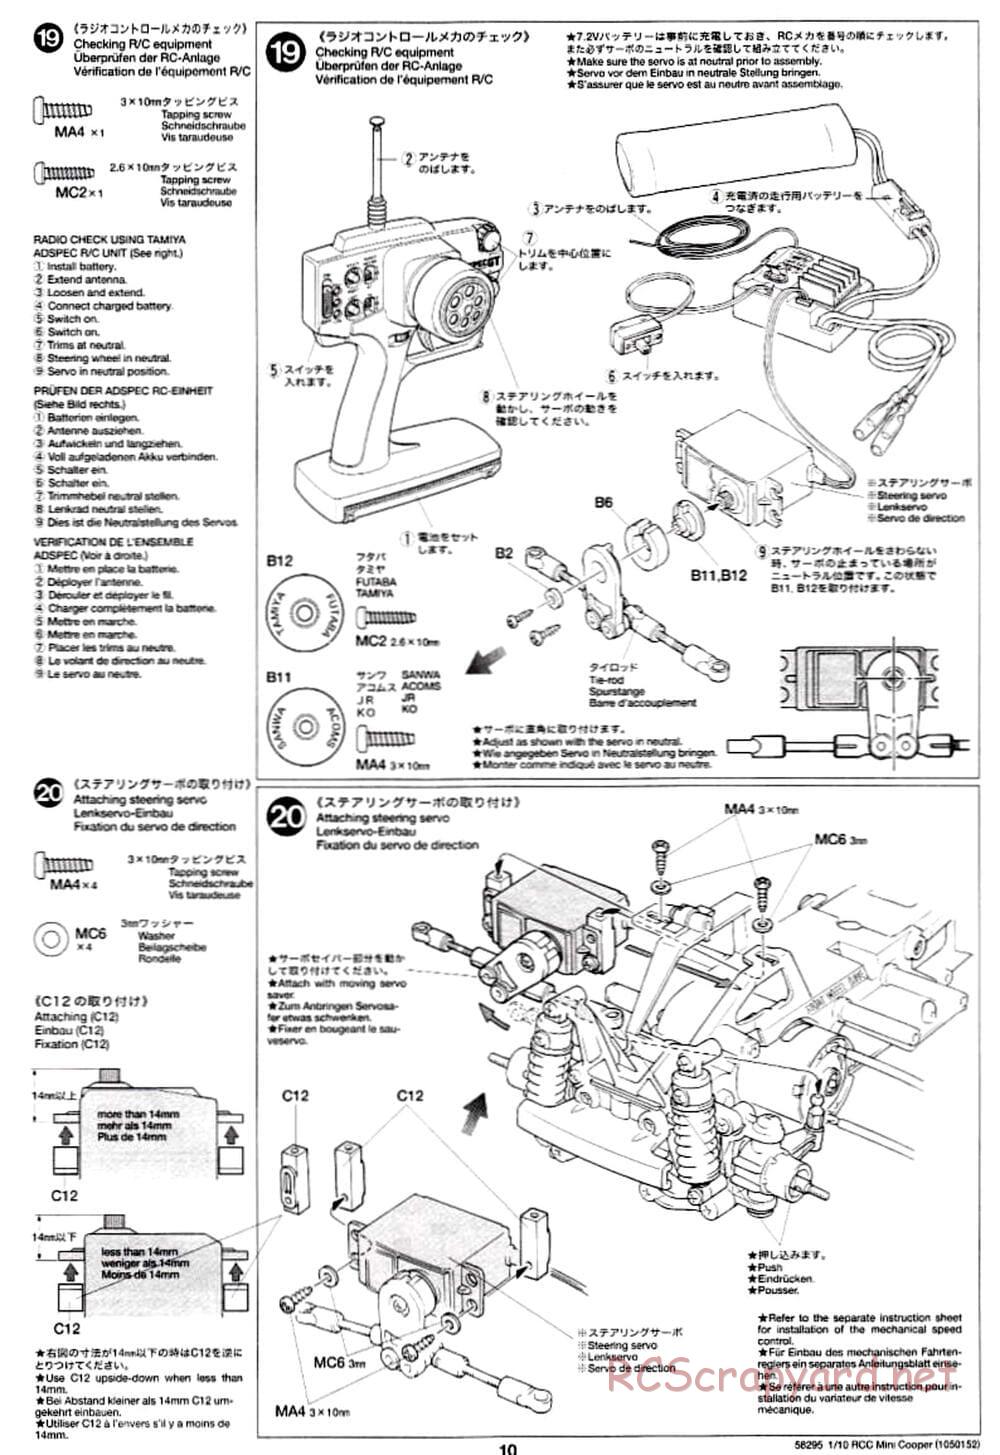 Tamiya - Mini Cooper - M03L Chassis - Manual - Page 9